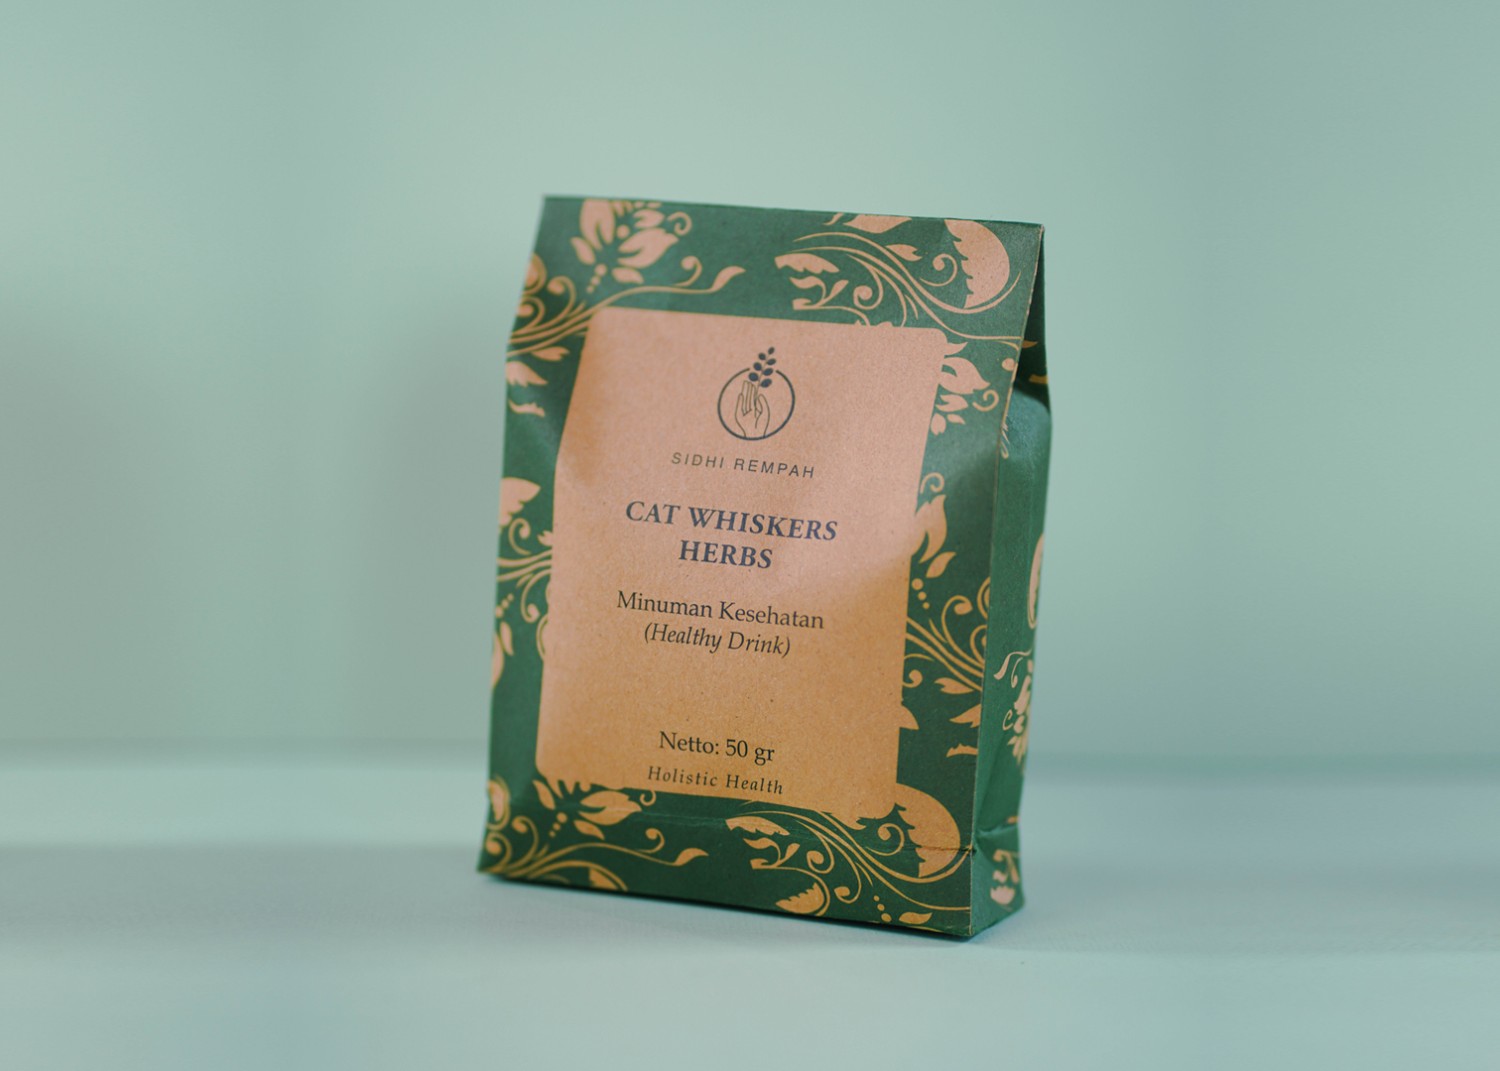 Cat Whisker Herbs (Healthy Drink)